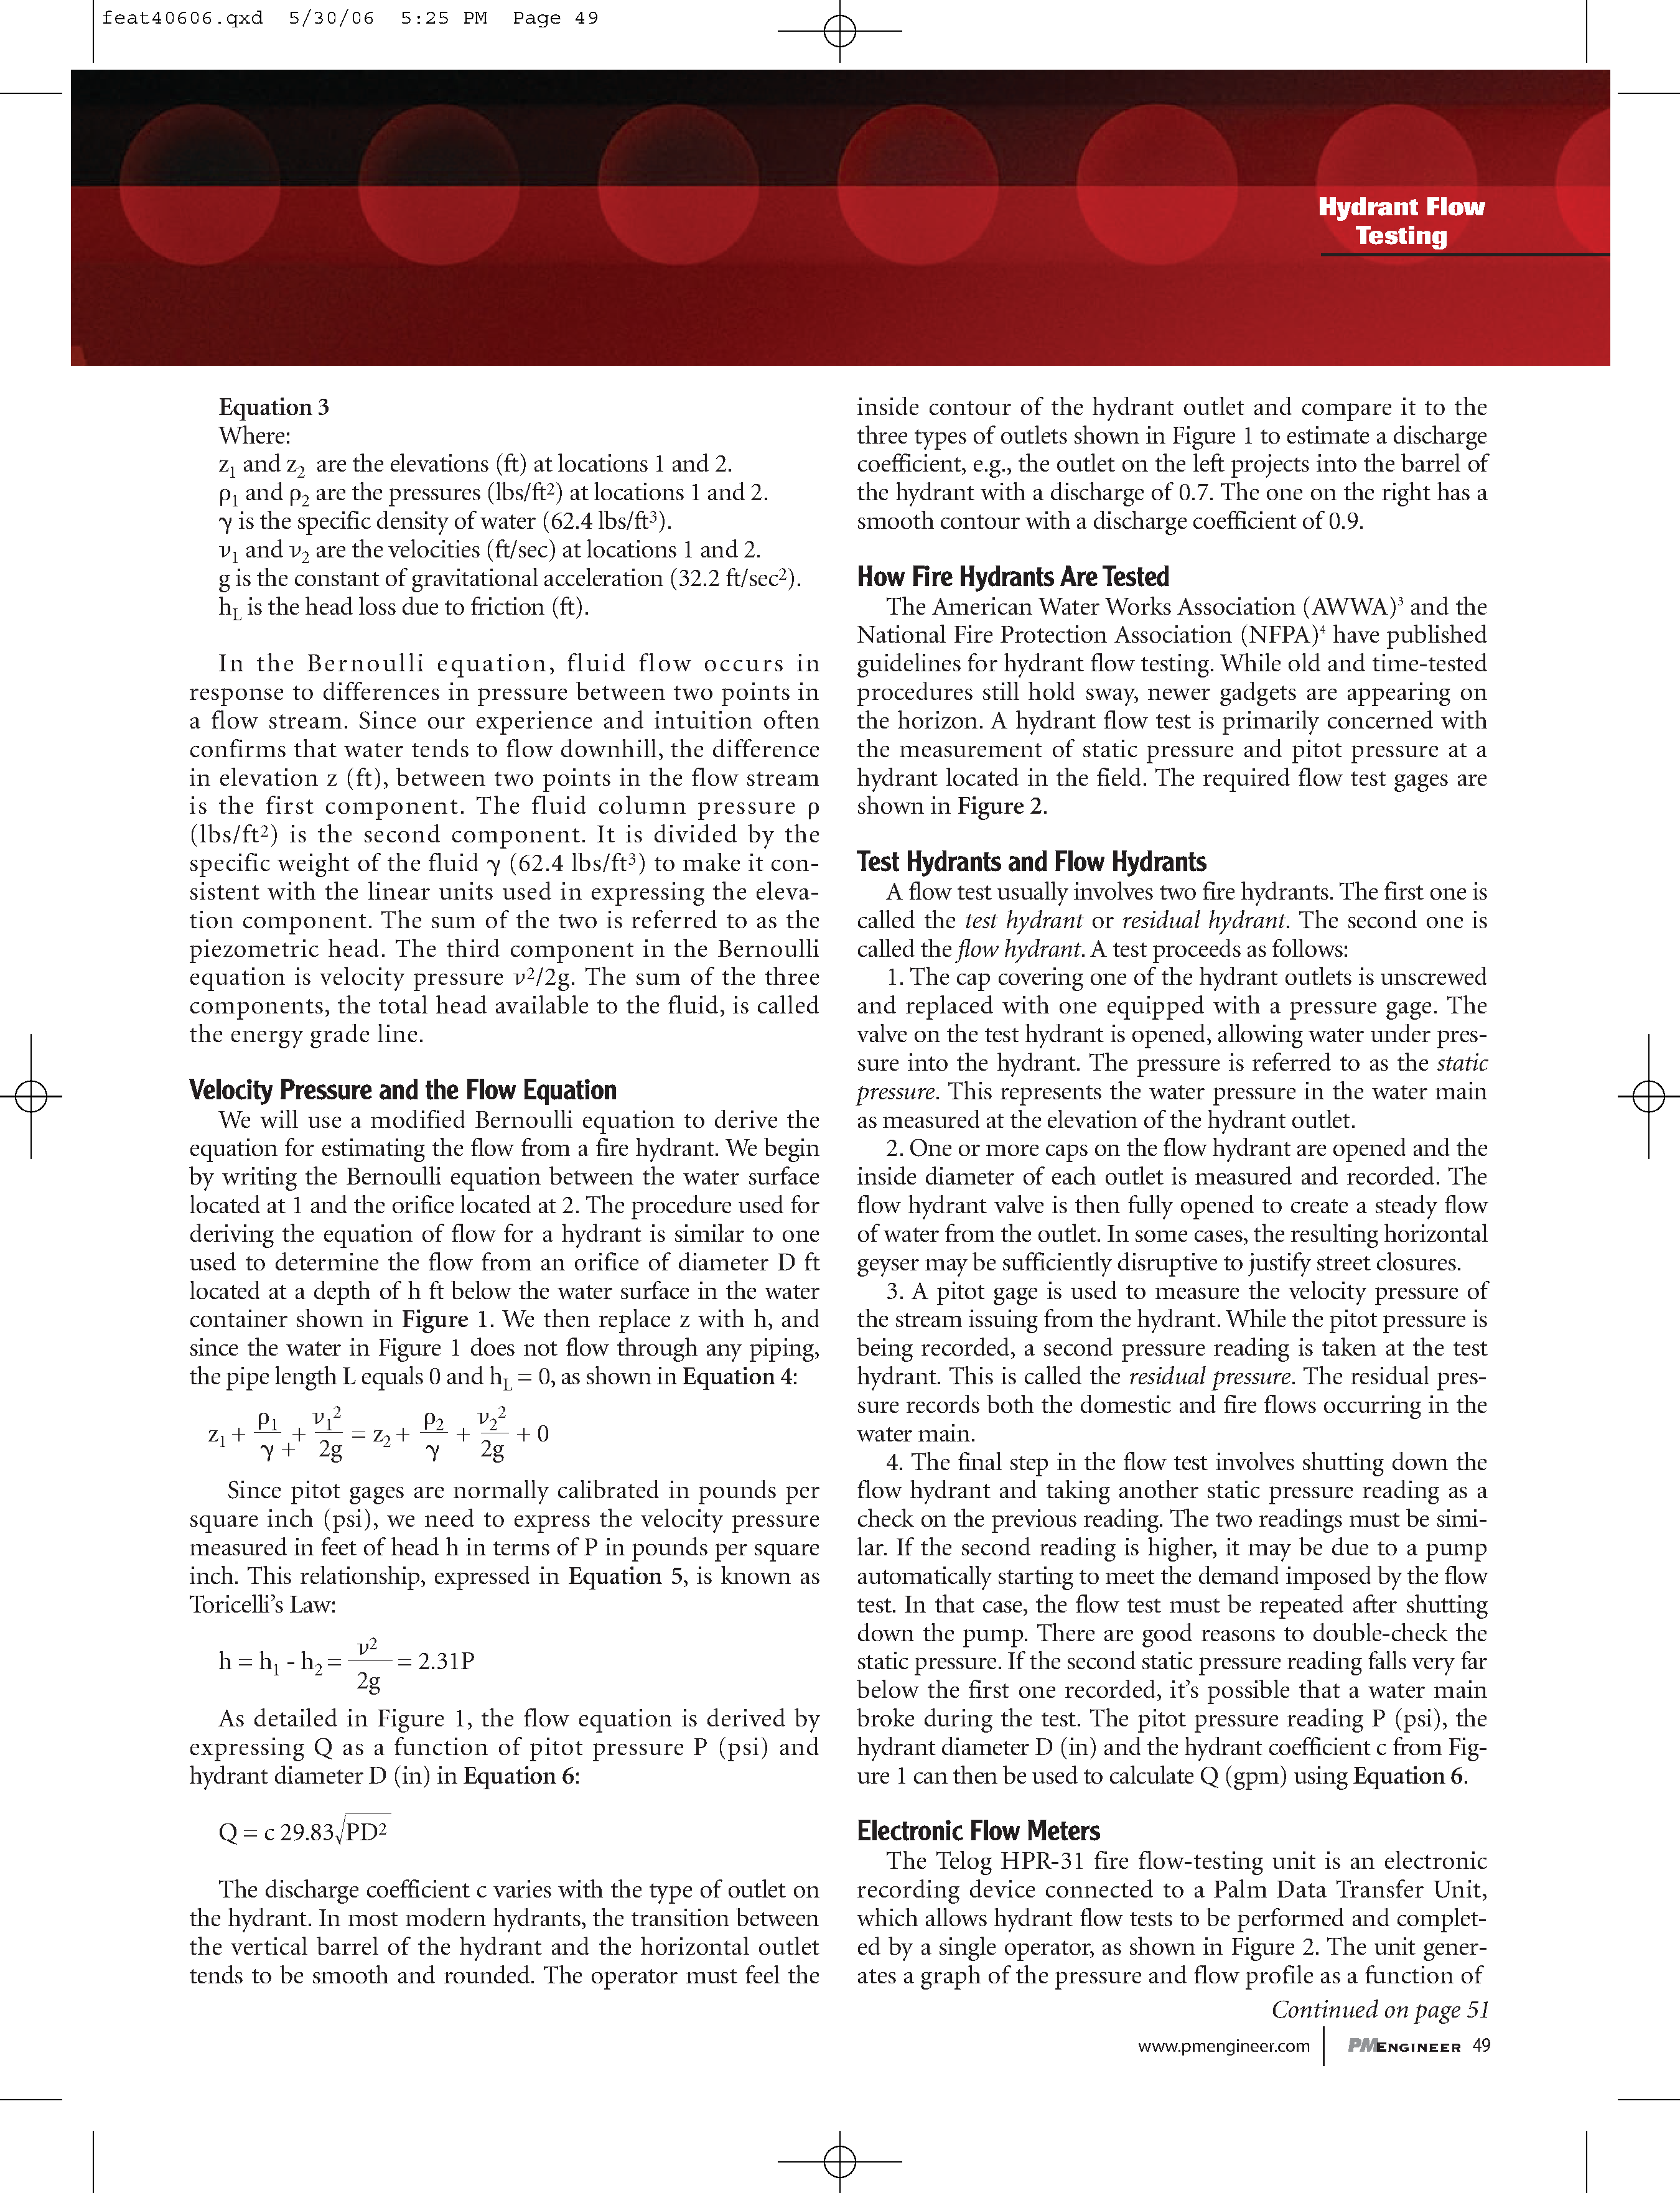 Hydrant_Flow_Test_PME_Magazine Page 44